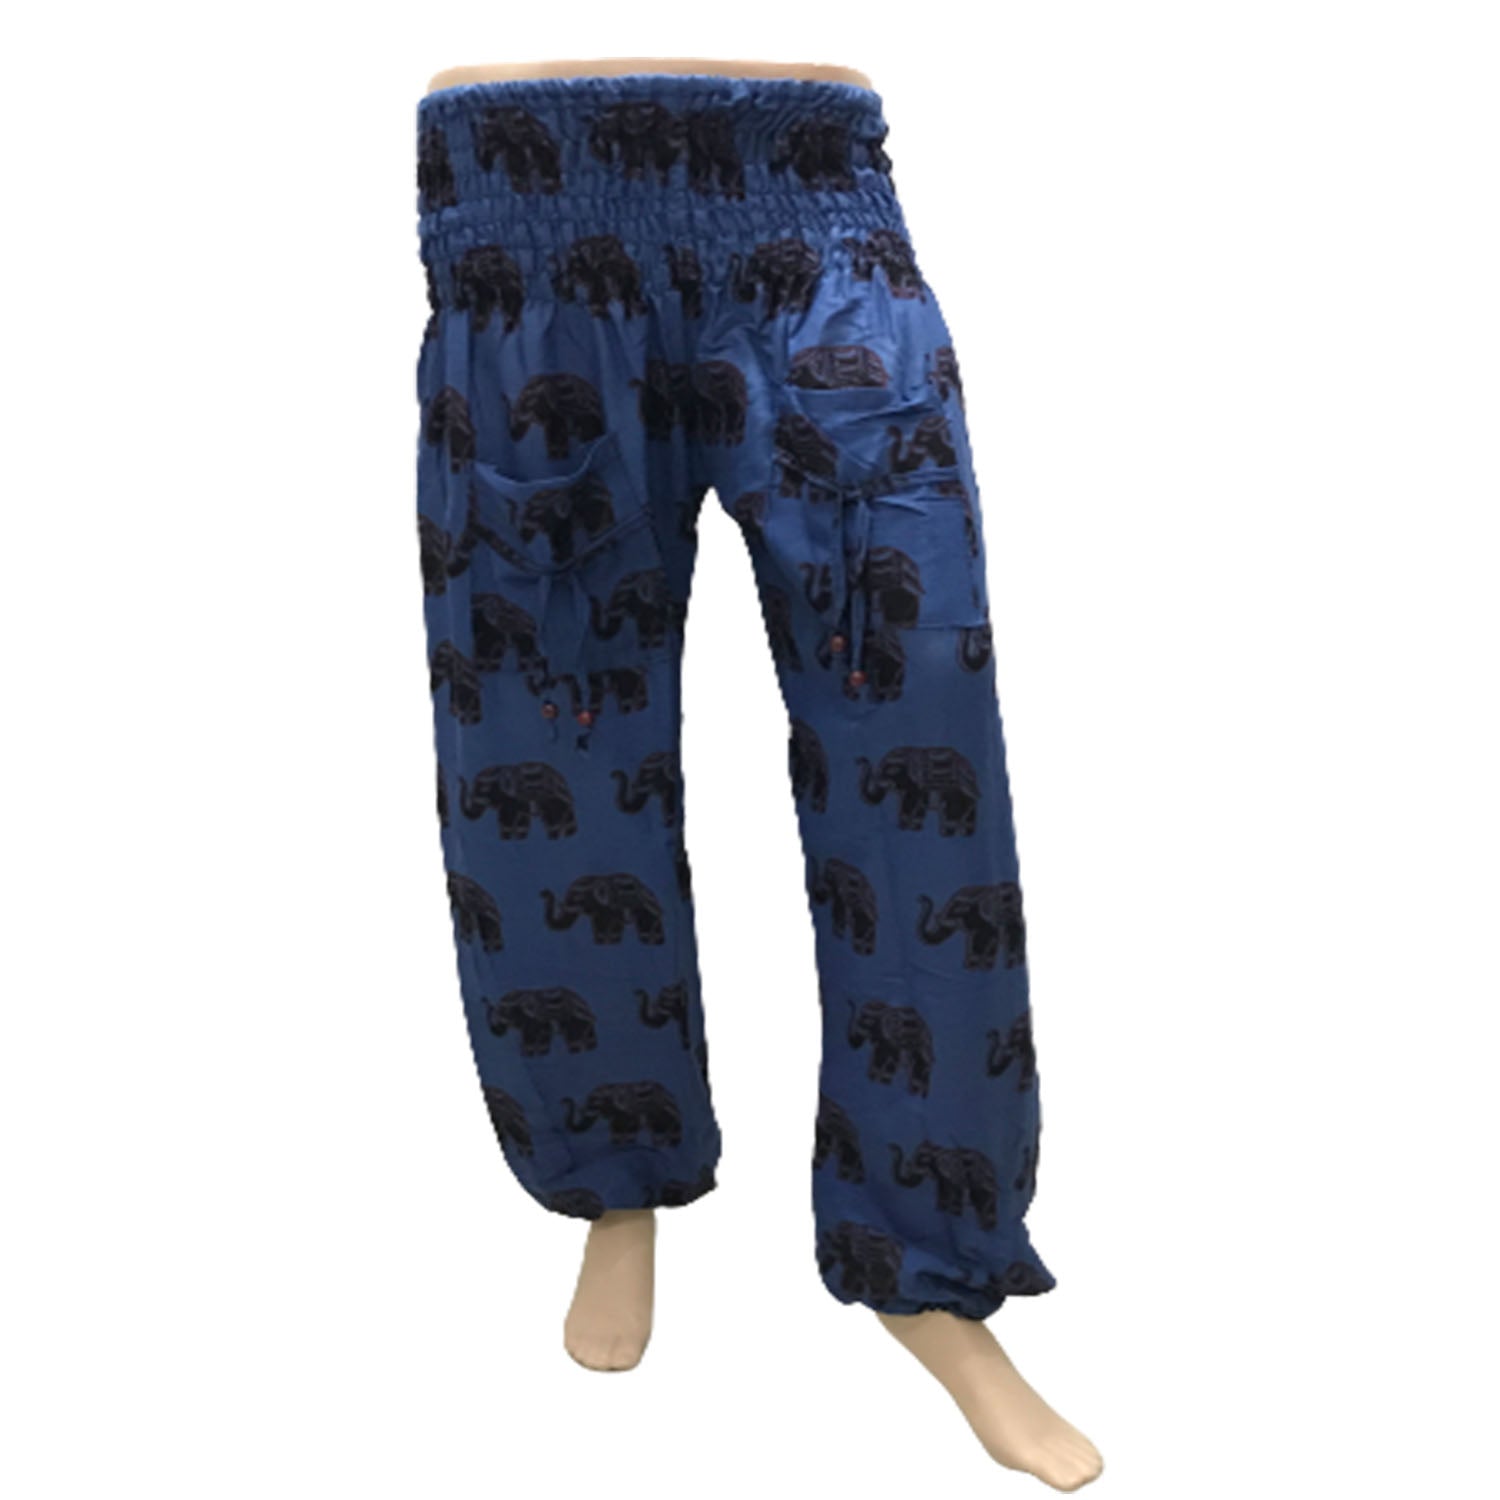 Ganesha Handicrafts, Cuffed Elephant Print Casual Trousers, Cuffed Casual Trousers, Elephant Print Trousers, Blue colour Cuffed Elephant Print Casual Trousers.